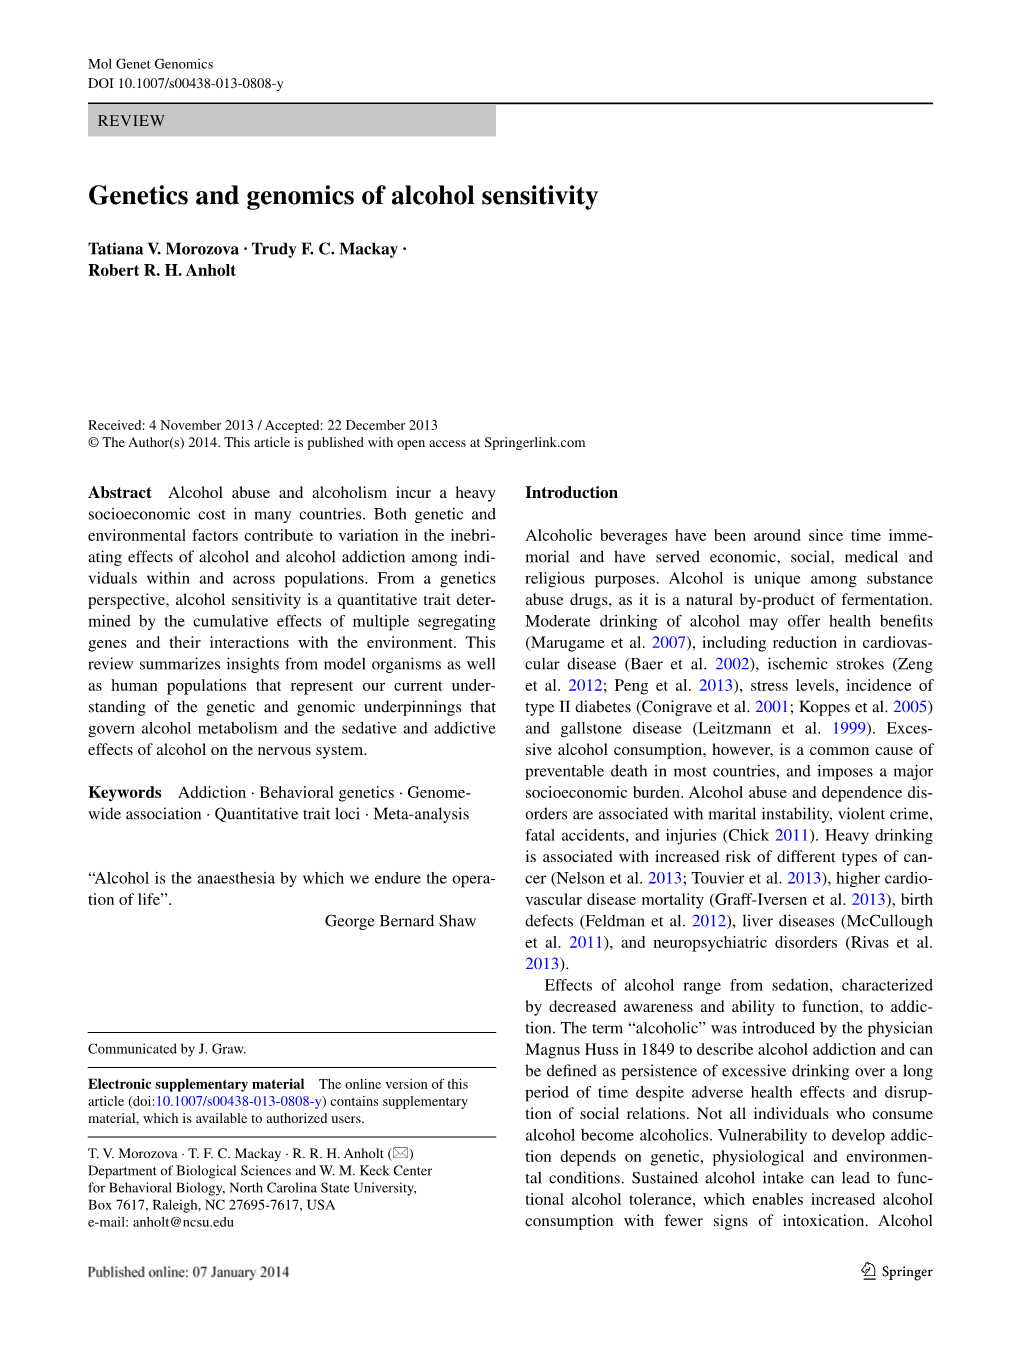 Genetics and Genomics of Alcohol Sensitivity